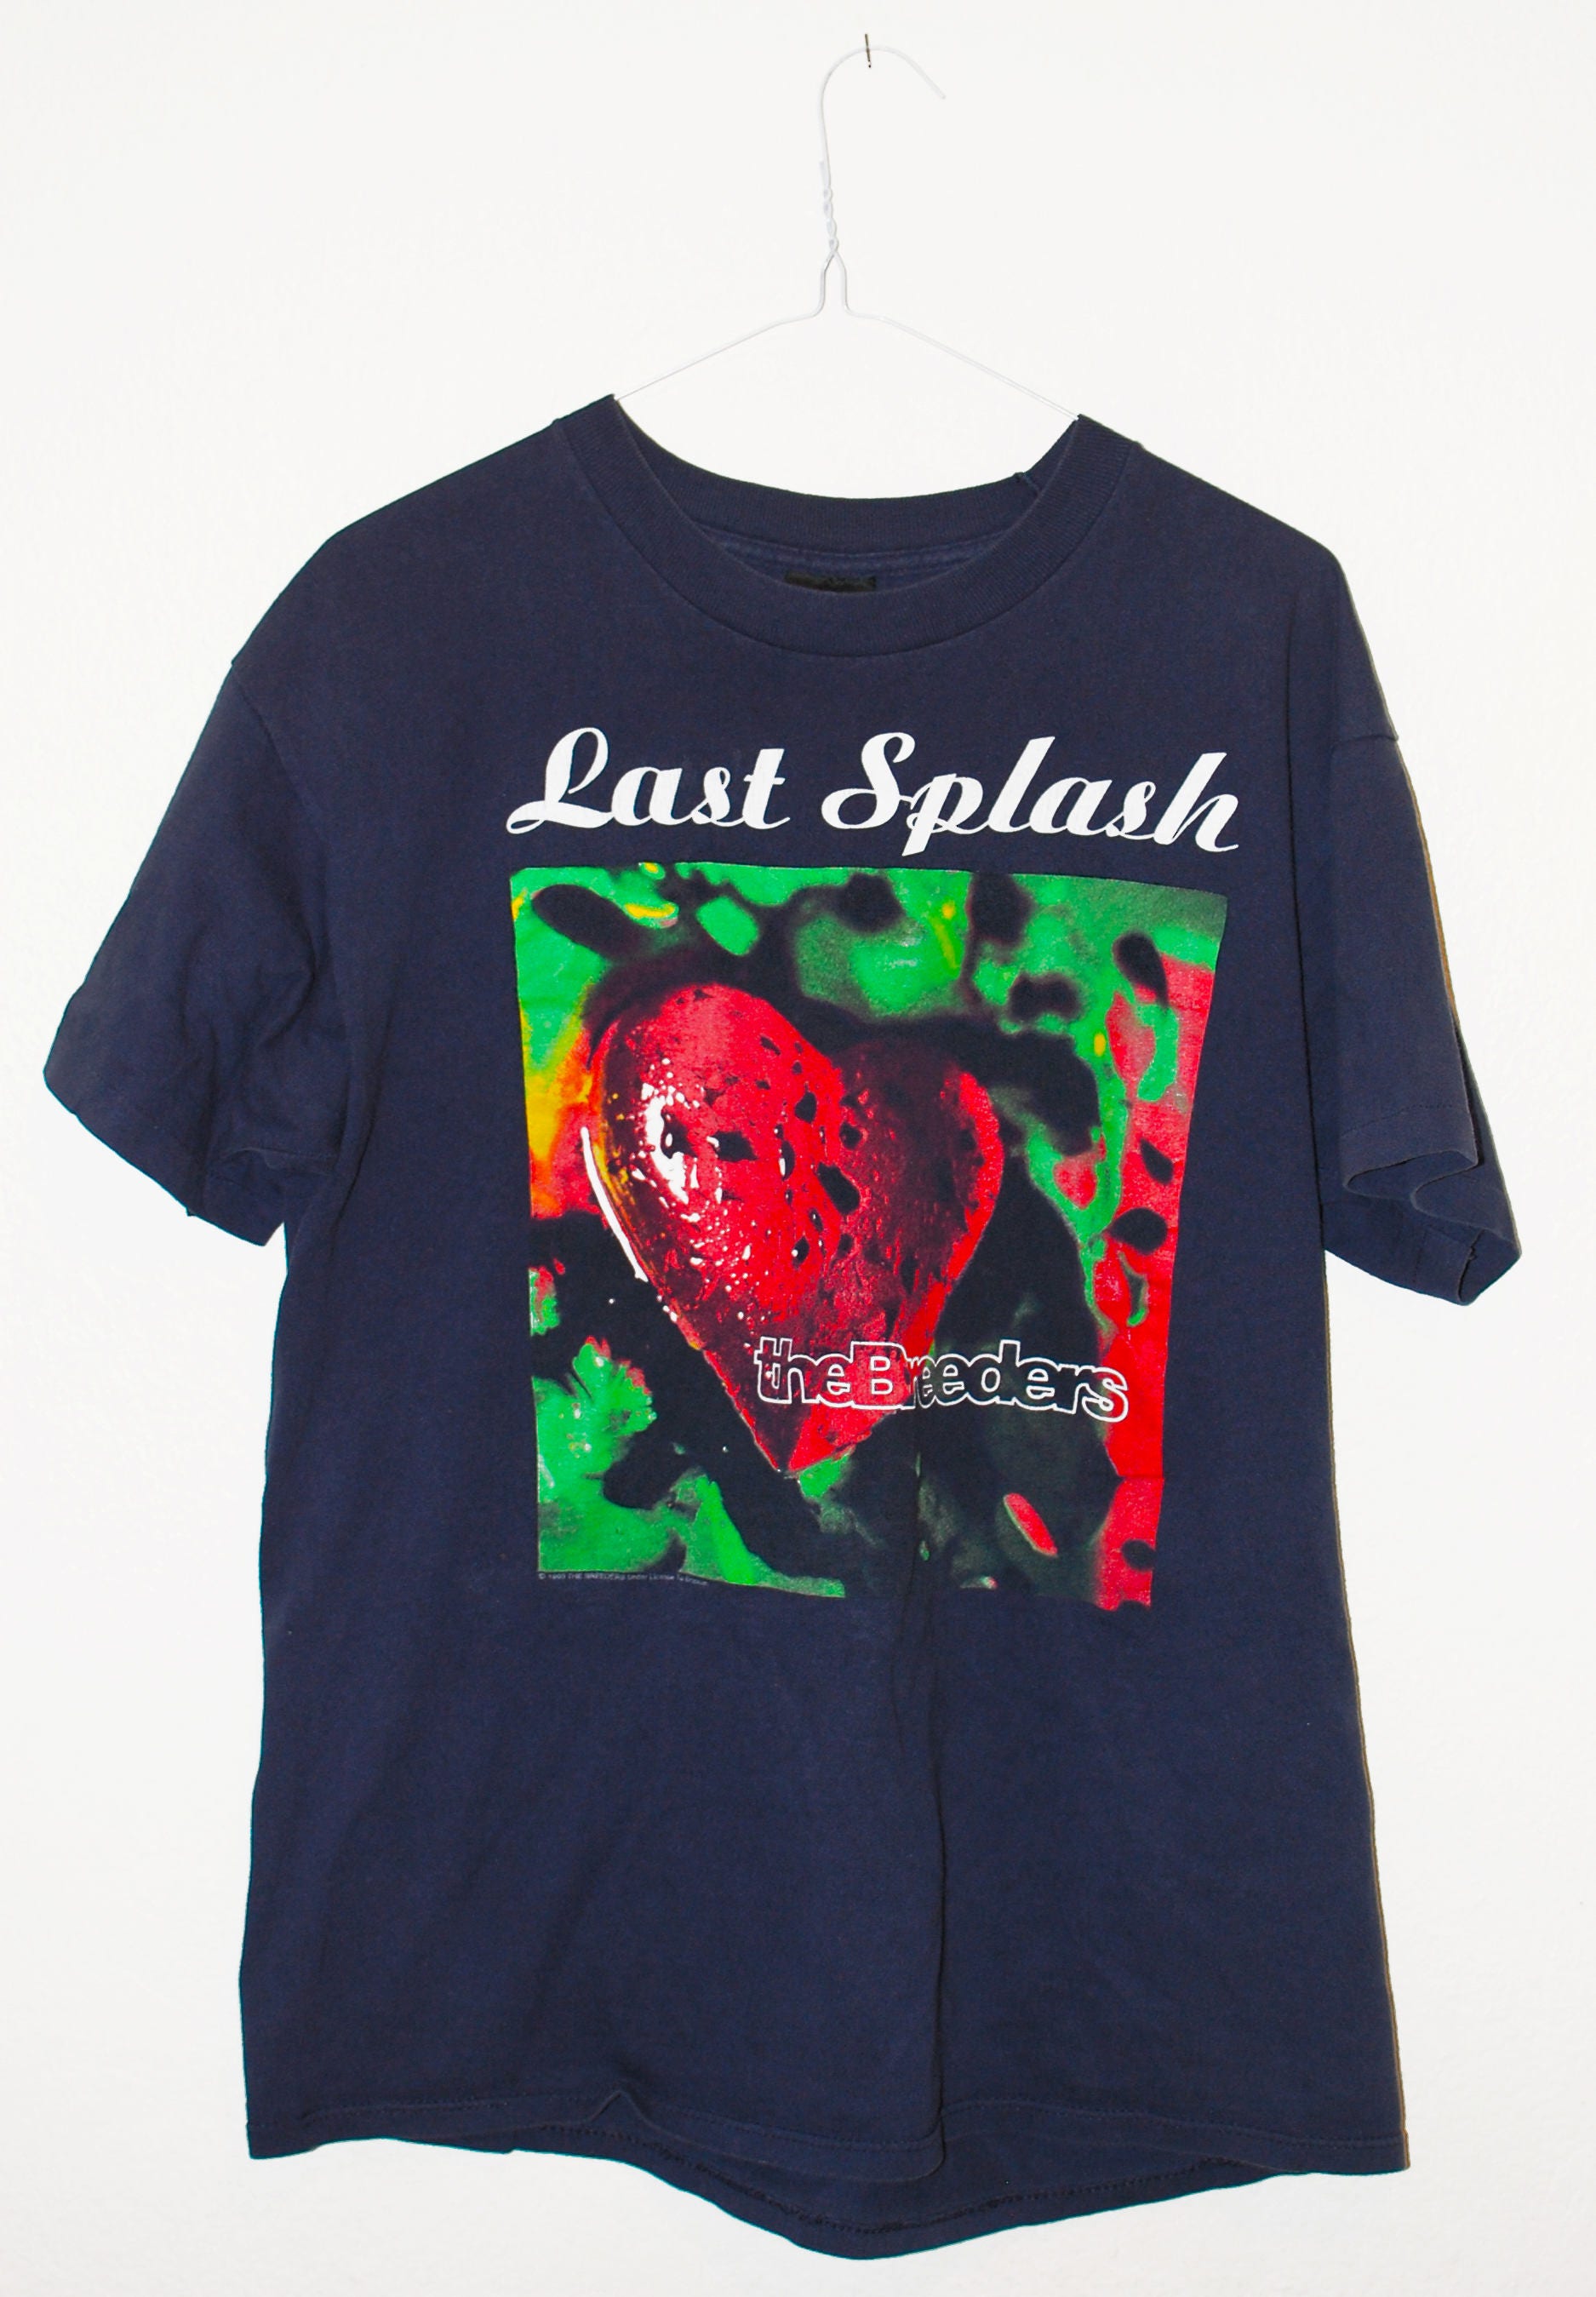 Vintage The Breeders 'Last Splash' t shirt | Etsy